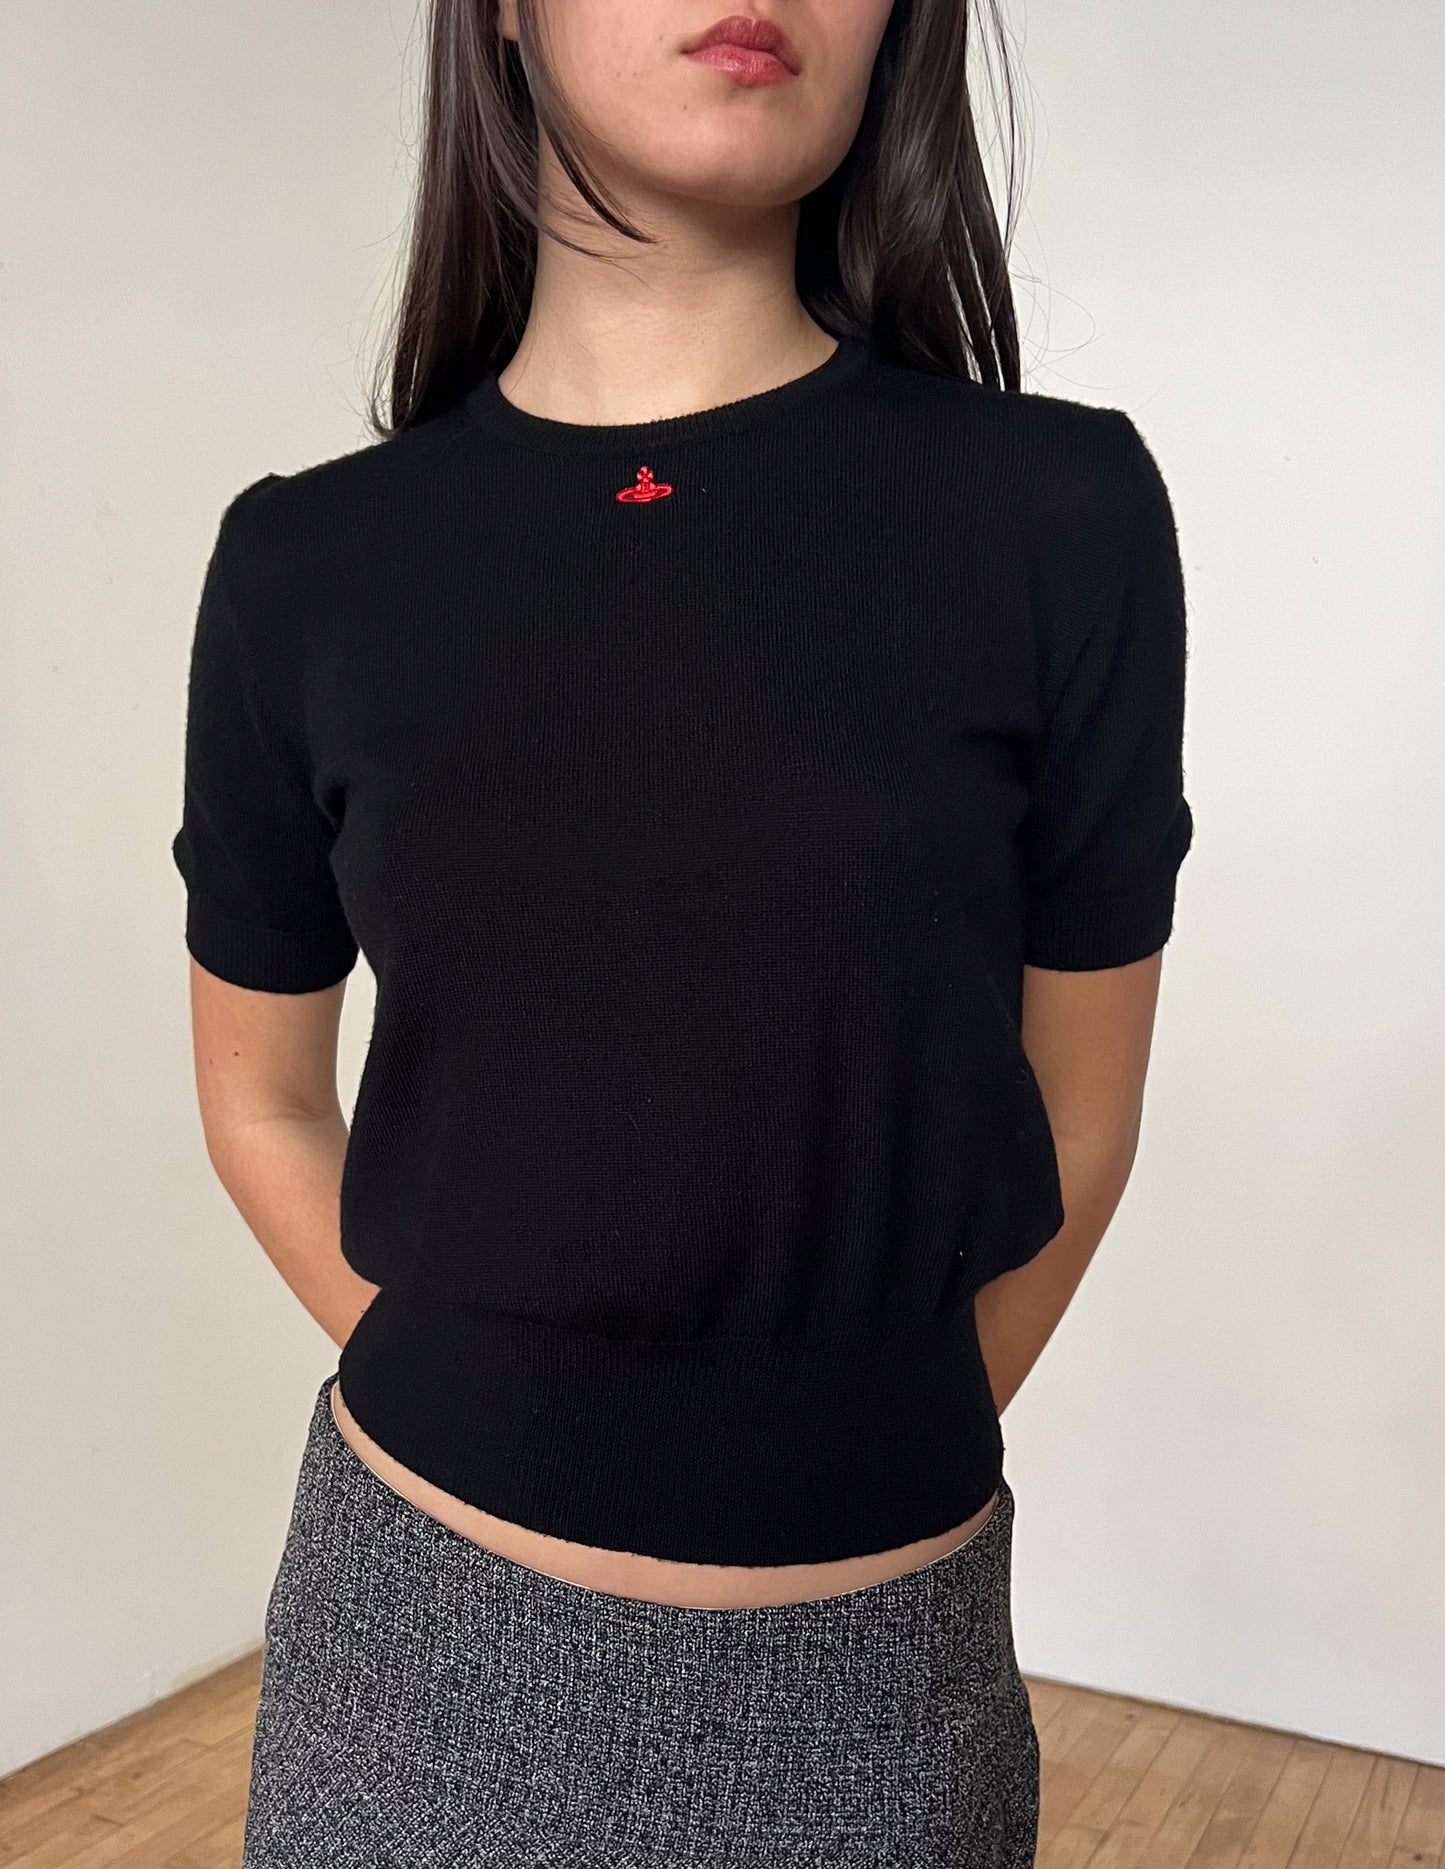 Vivienne Westwood Red Label Black Short Sleeve Sweater